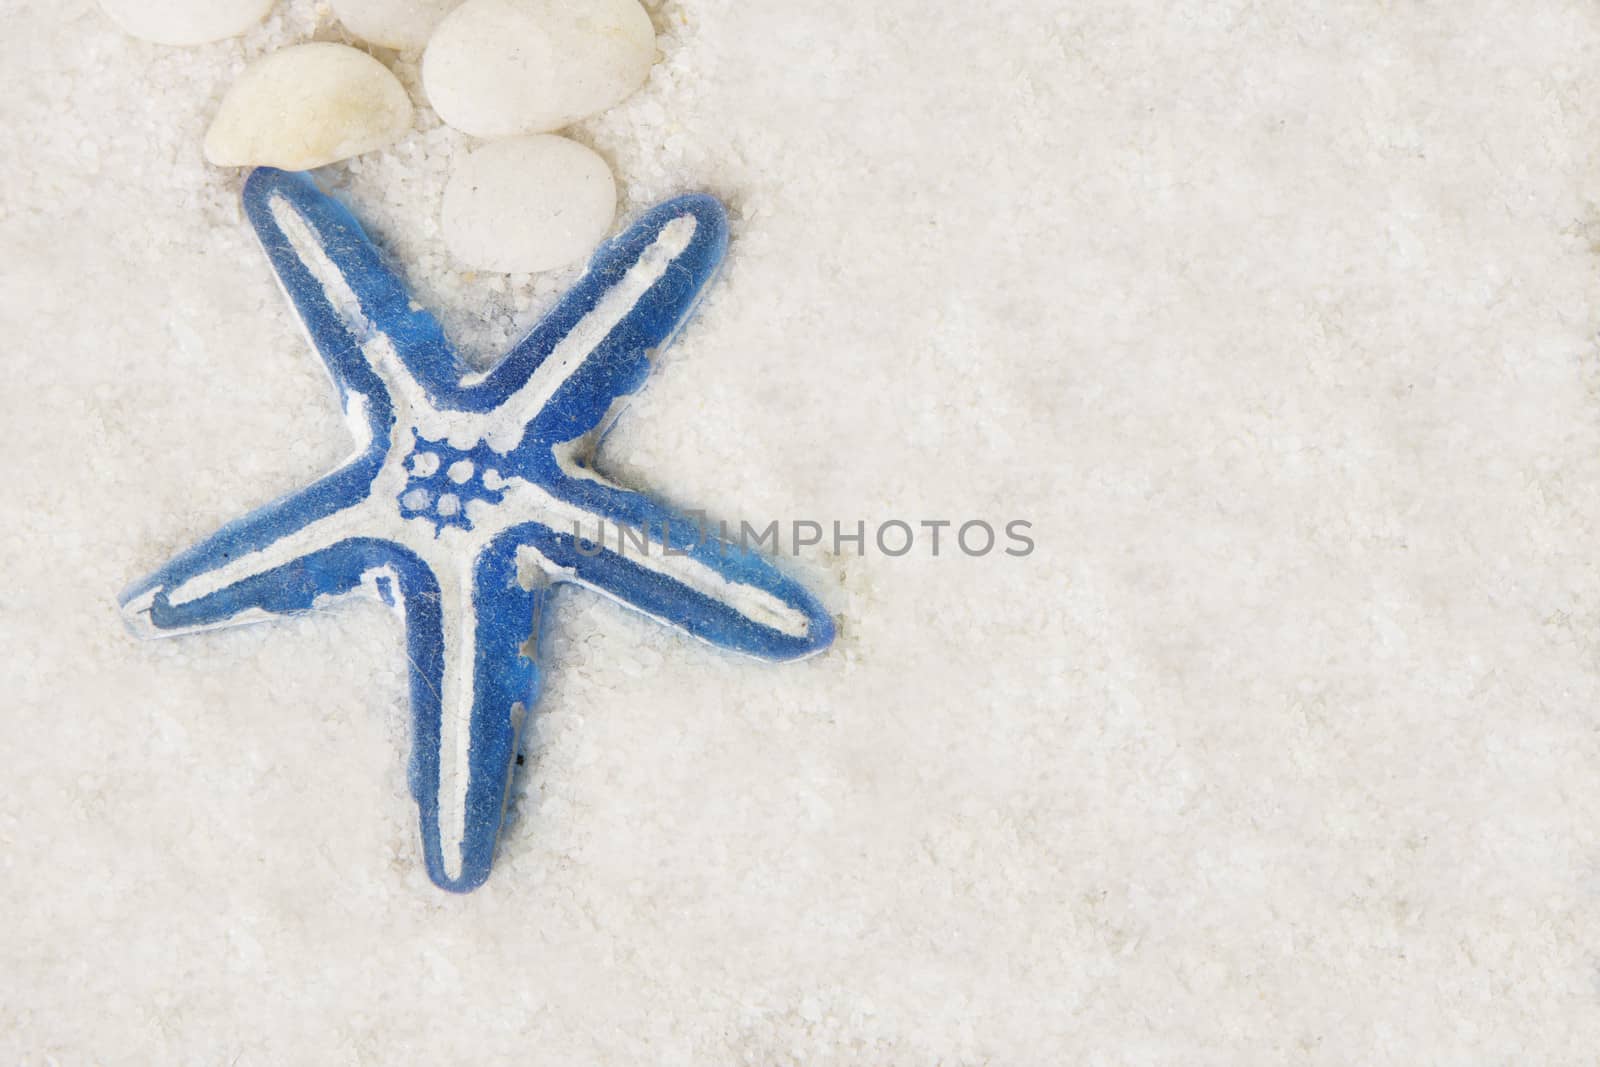 decoration starfish by Tomjac1980